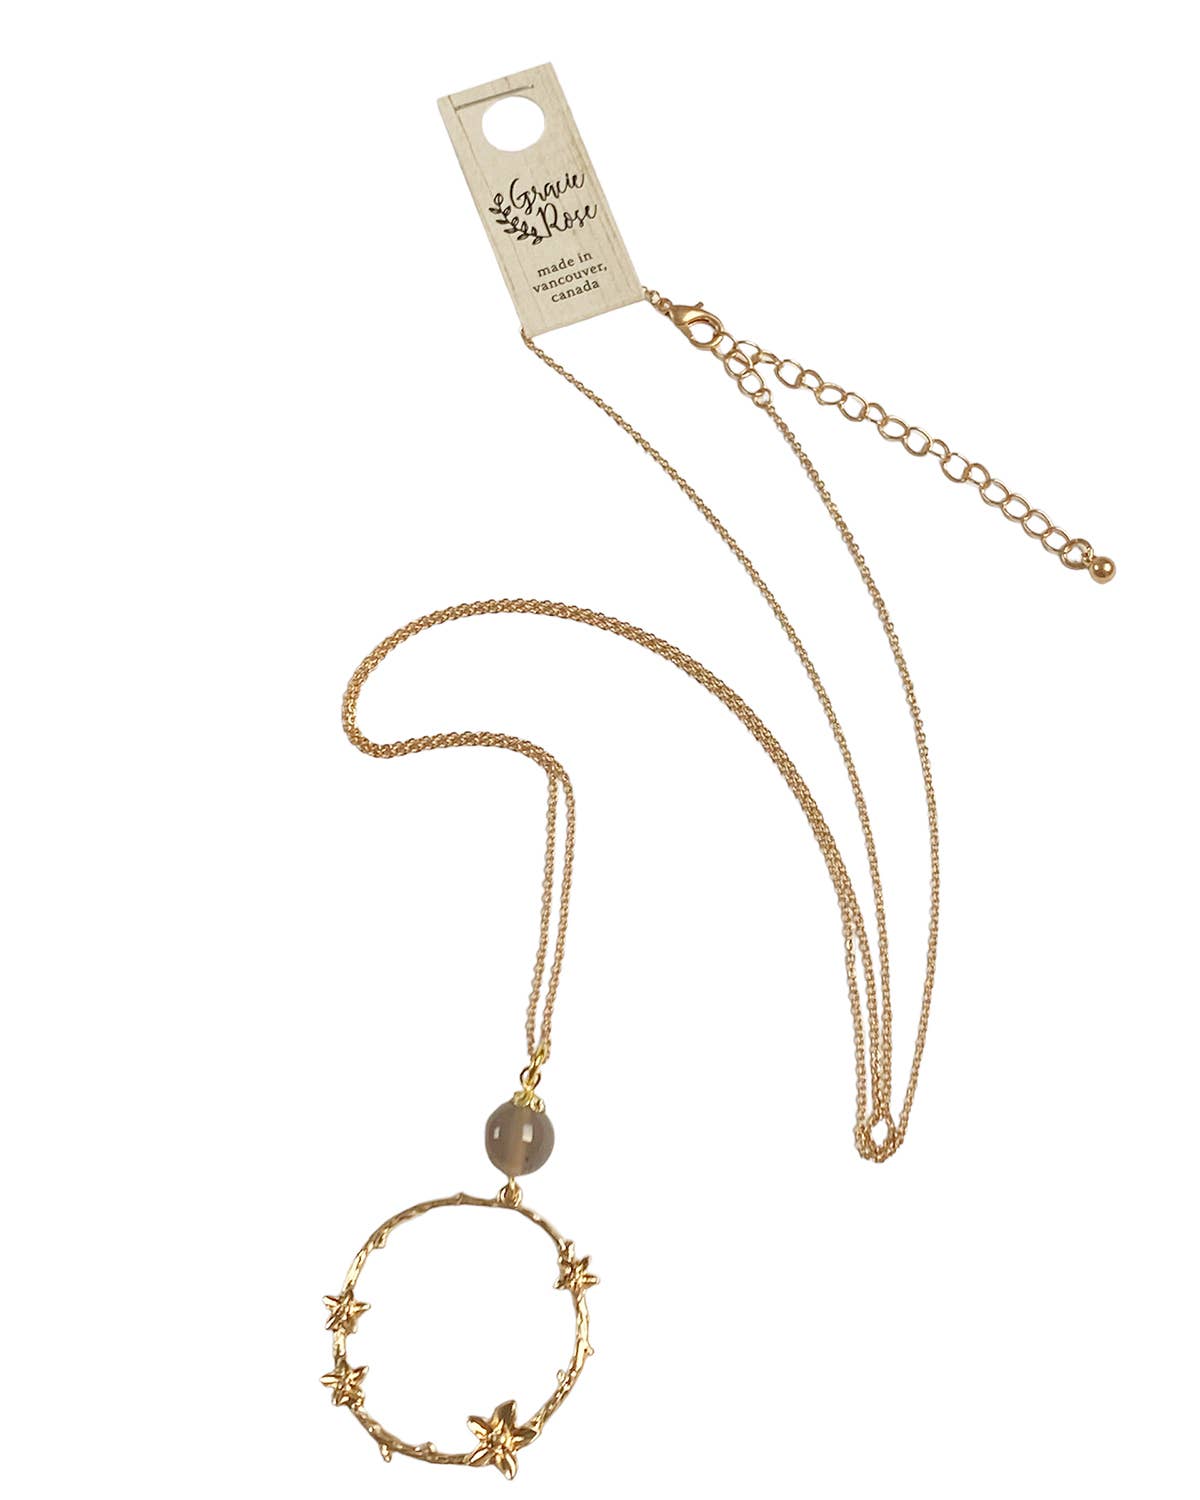 Gracie Rose Designs - Romantic Gold Circle Branch Grey Agate Pendant Necklace